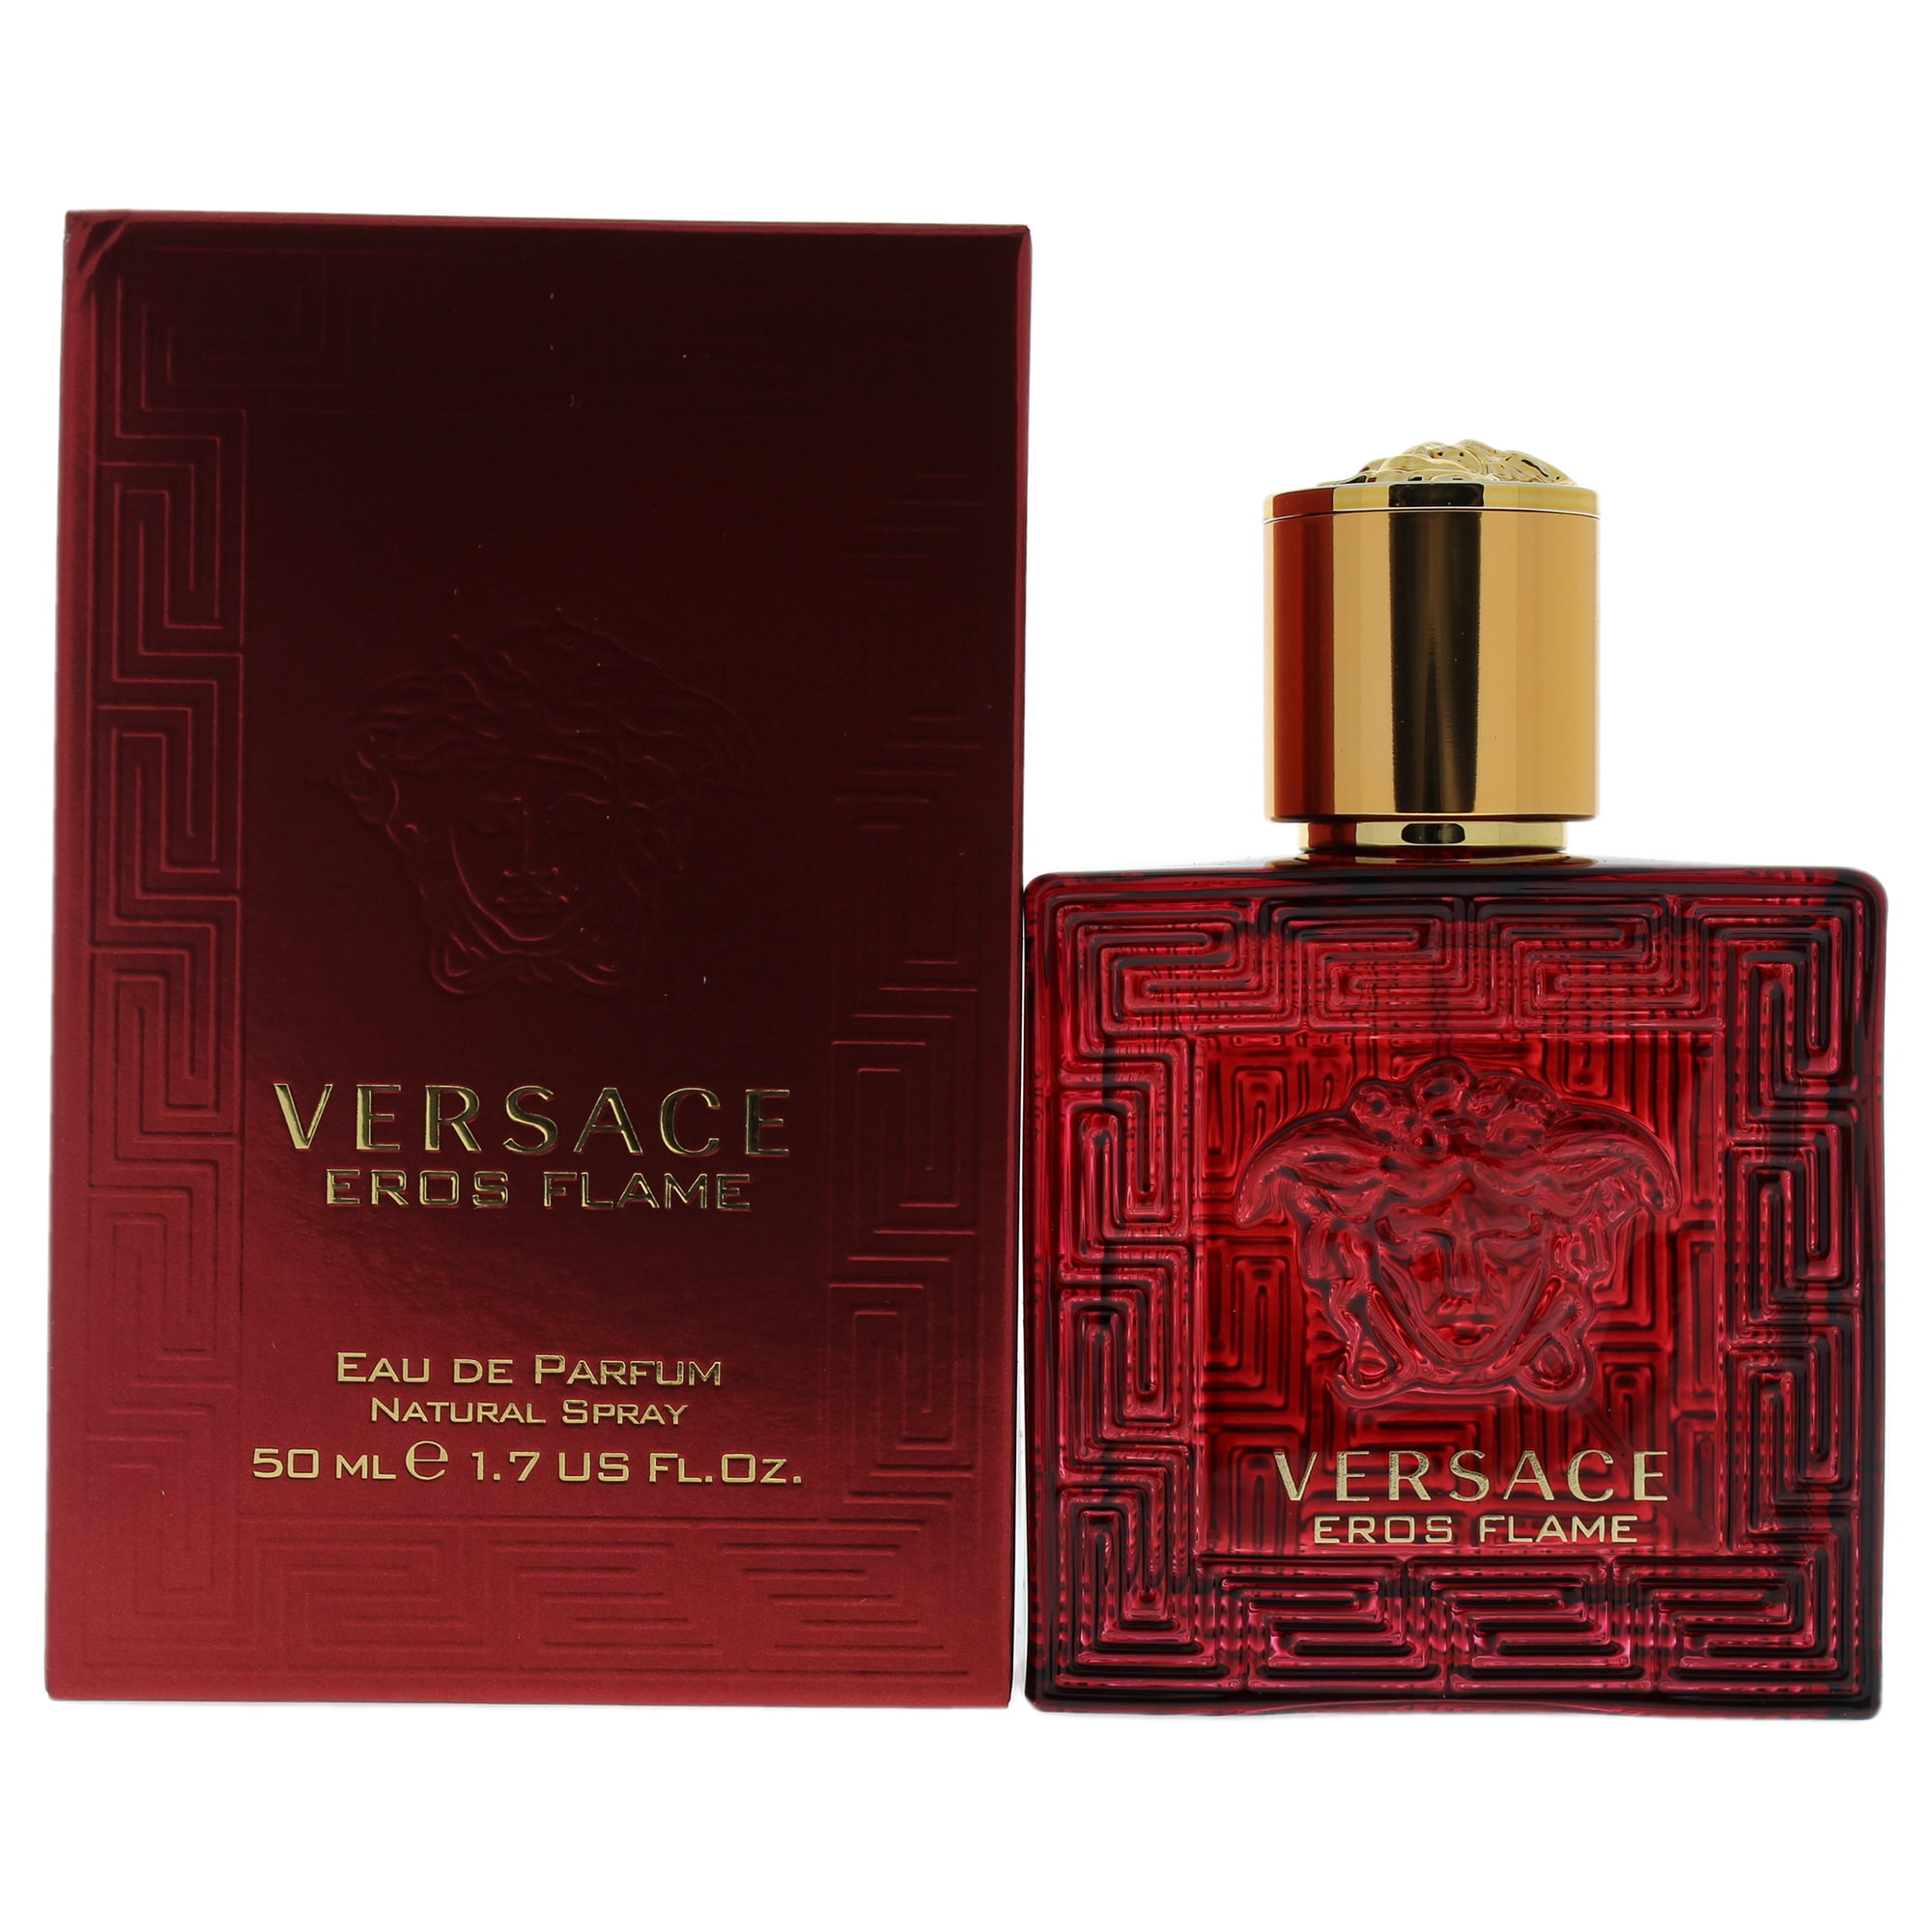 versace 2018 perfume